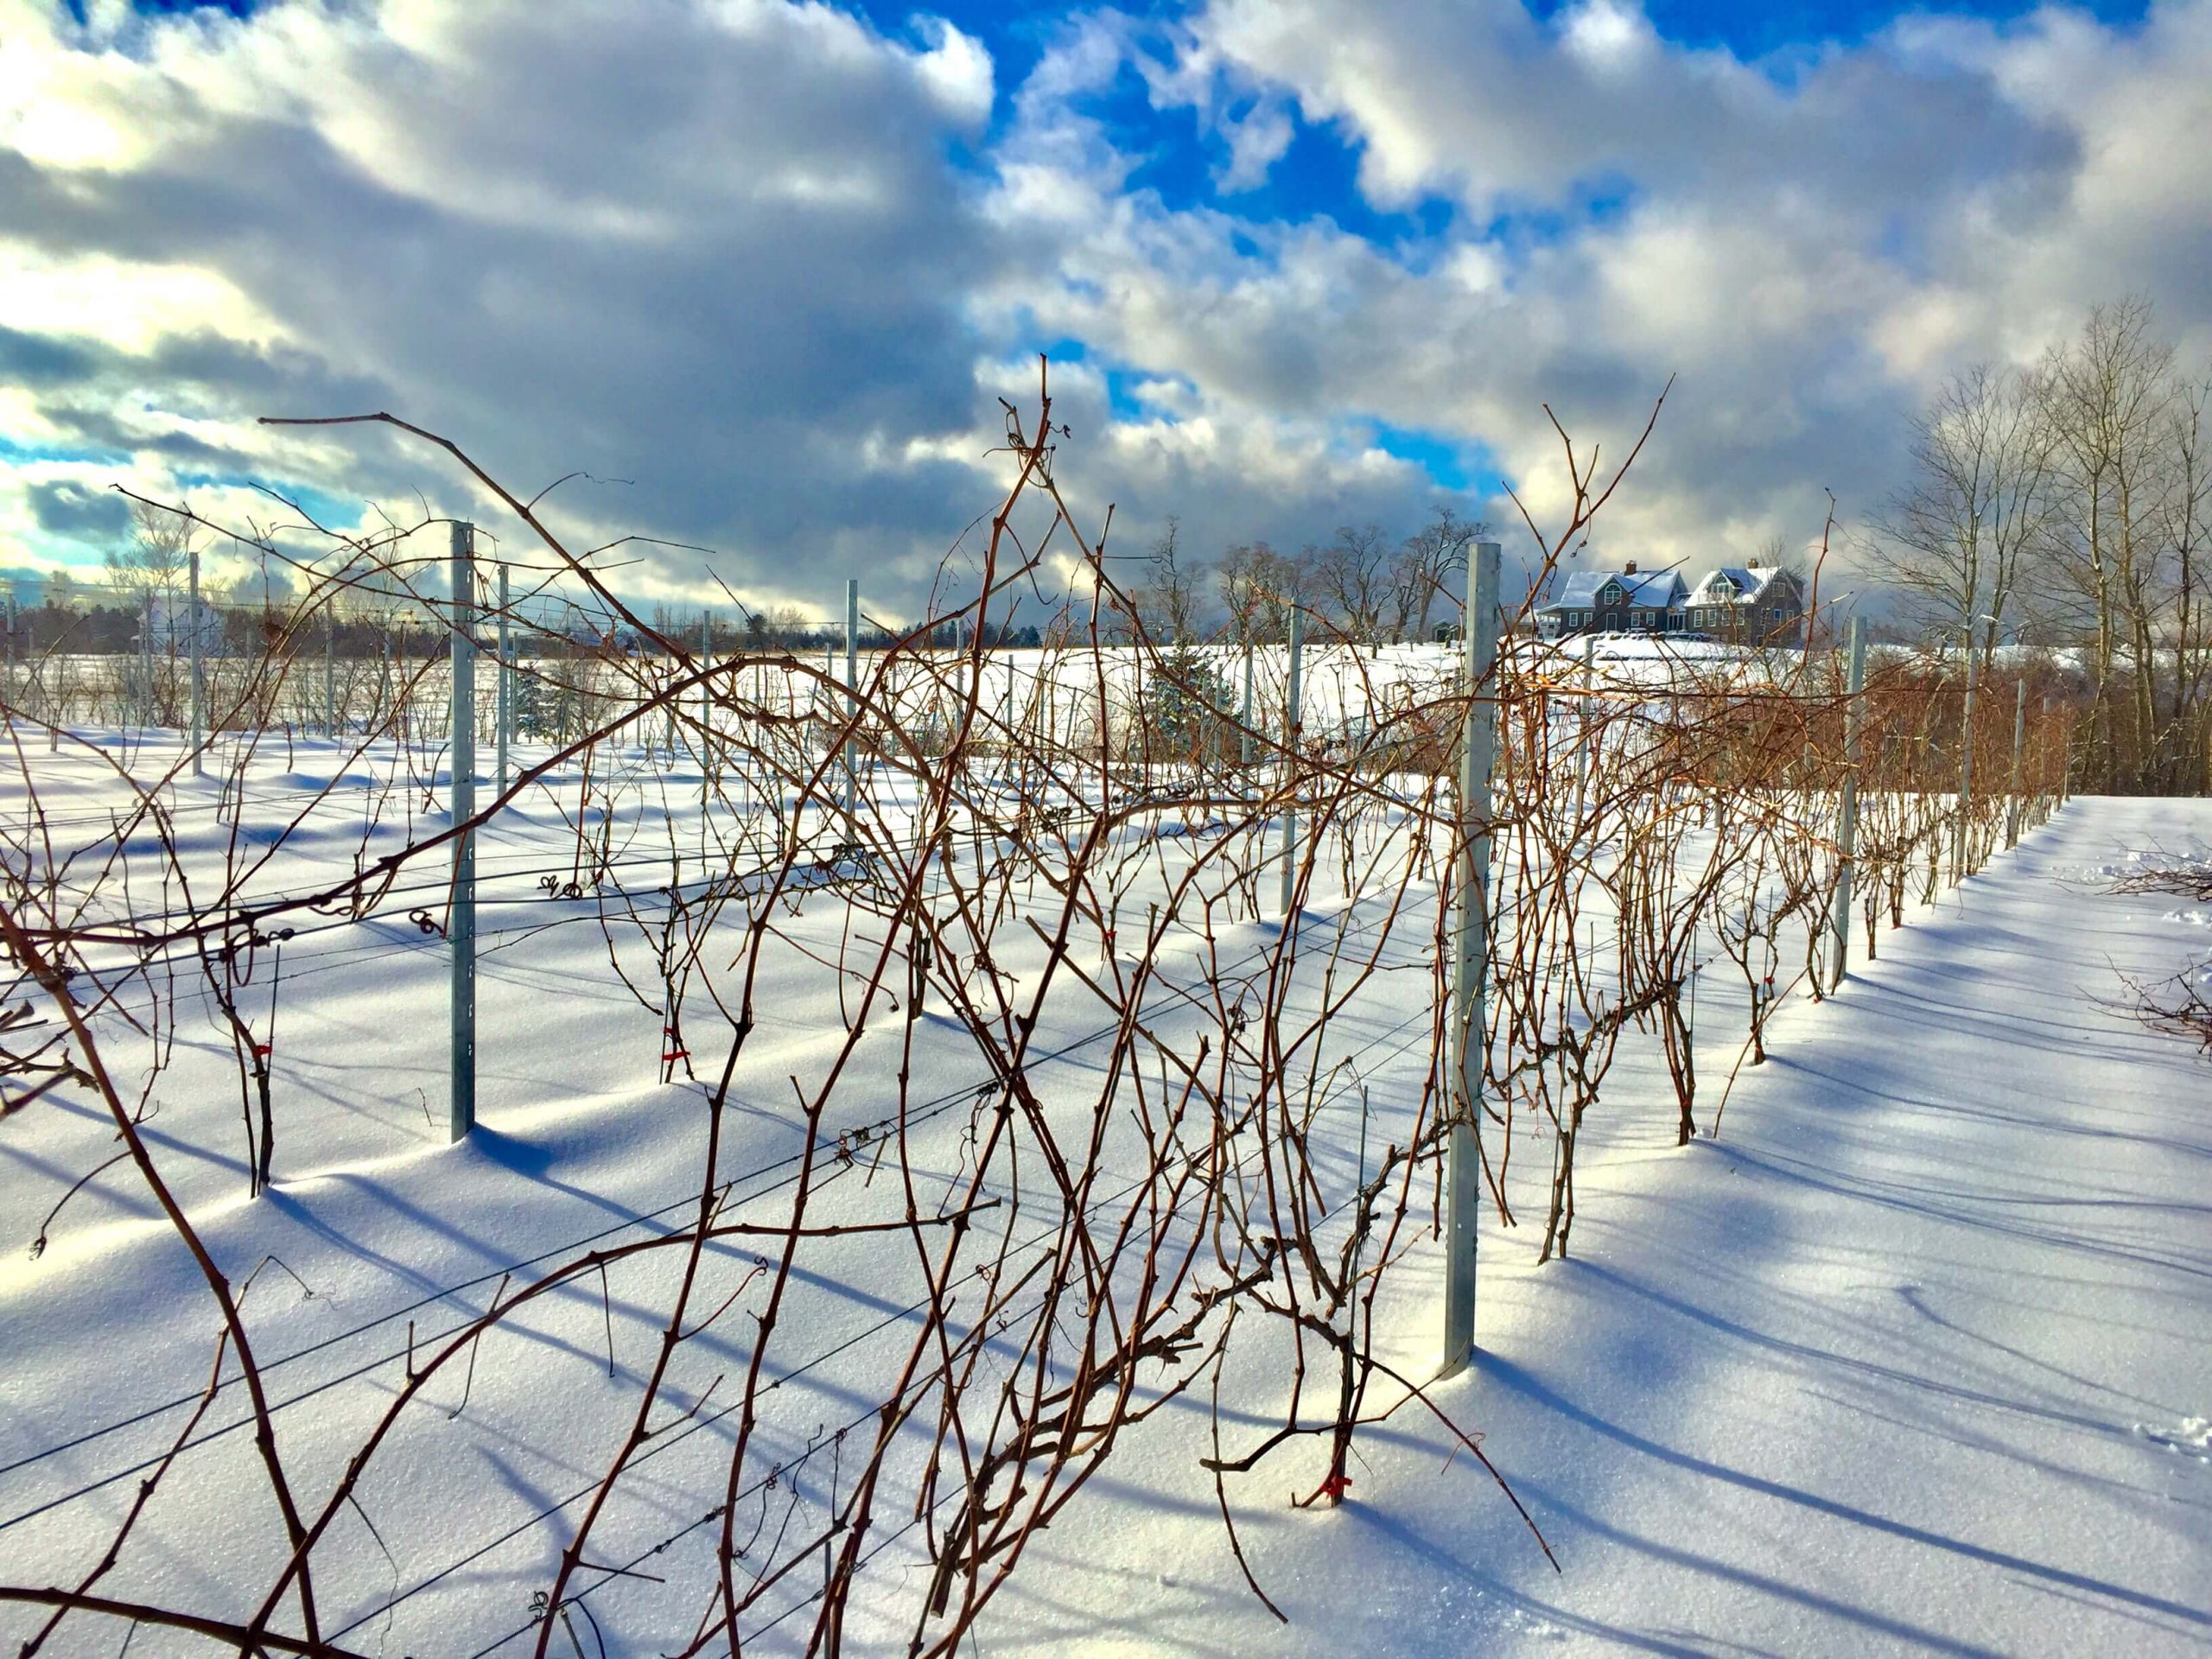 A beautiful winter day at Johnston Vineyards